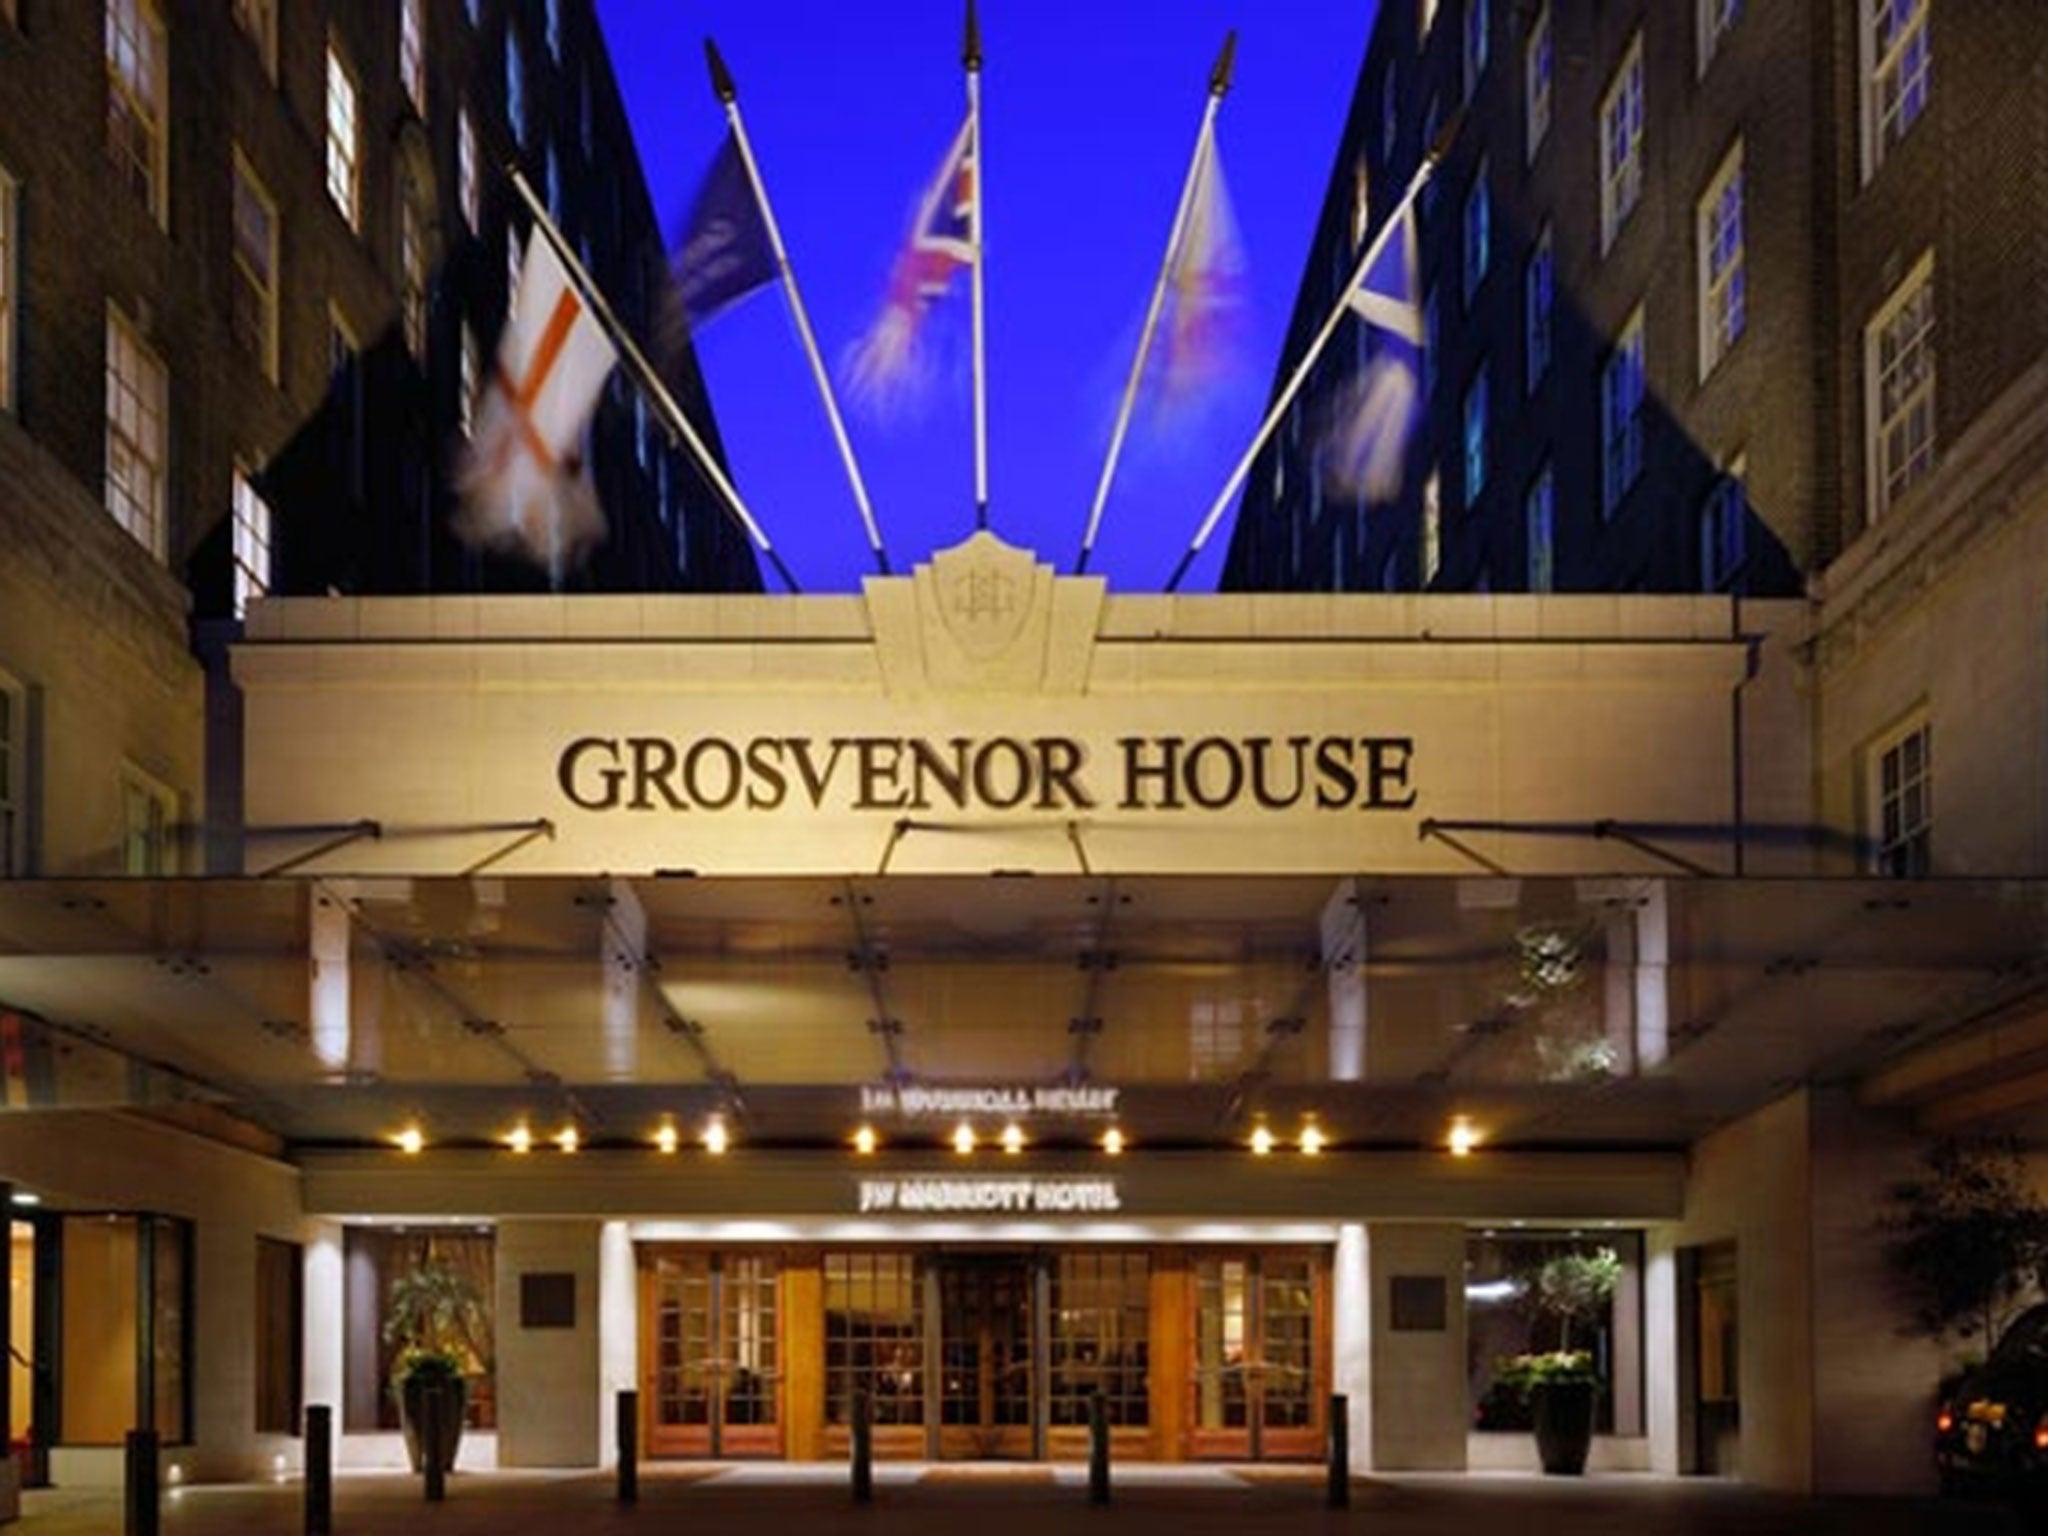 The Grosvenor House Hotel